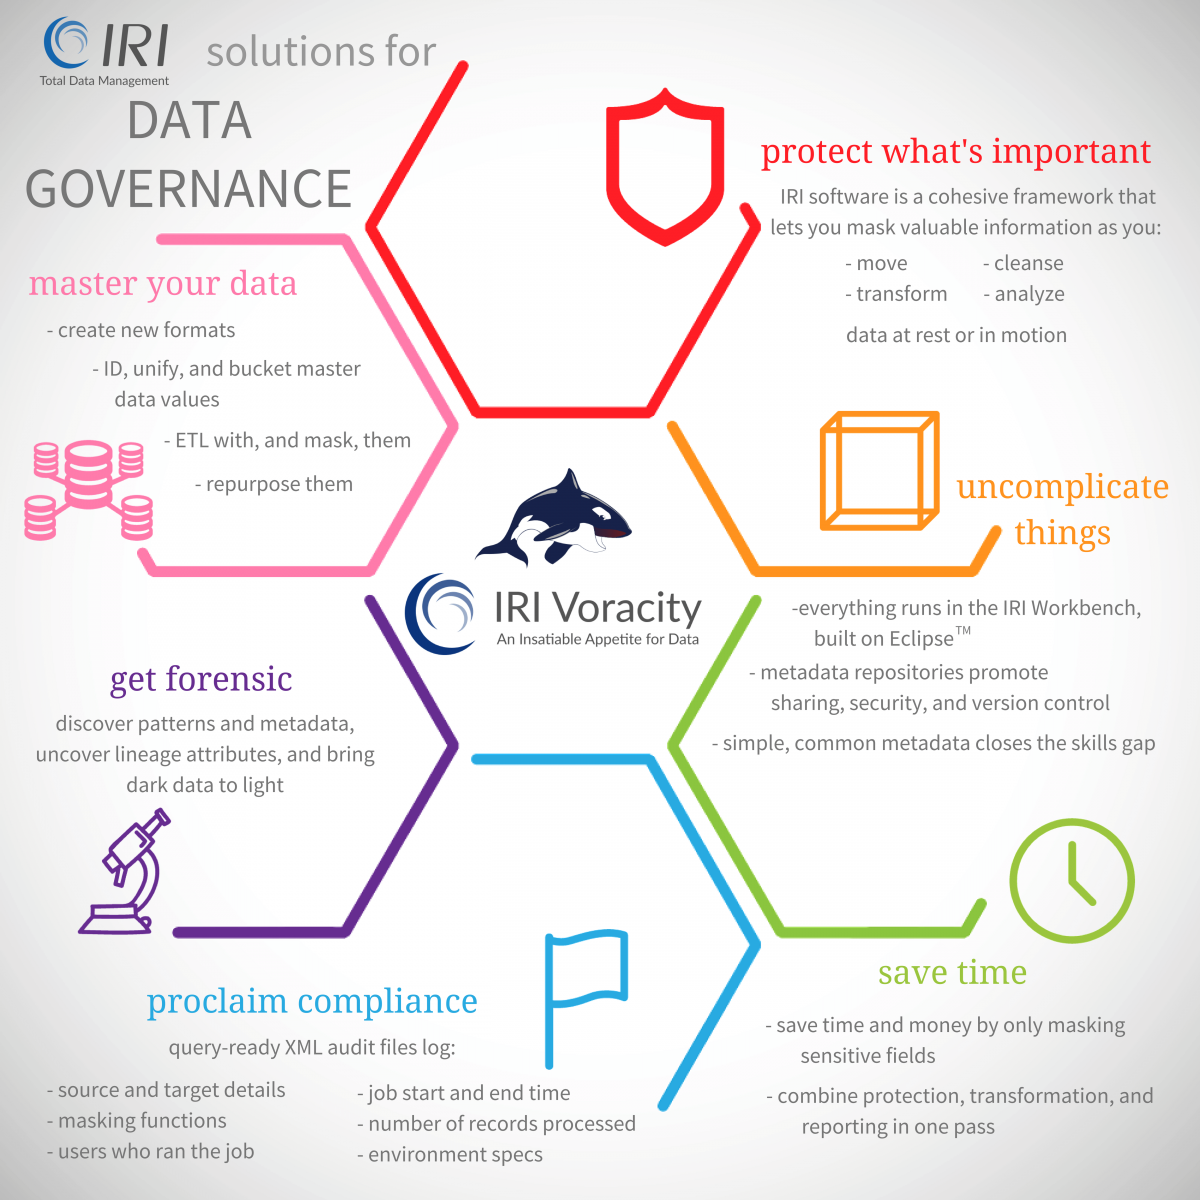 IRI Voracity solutions for data governance problems